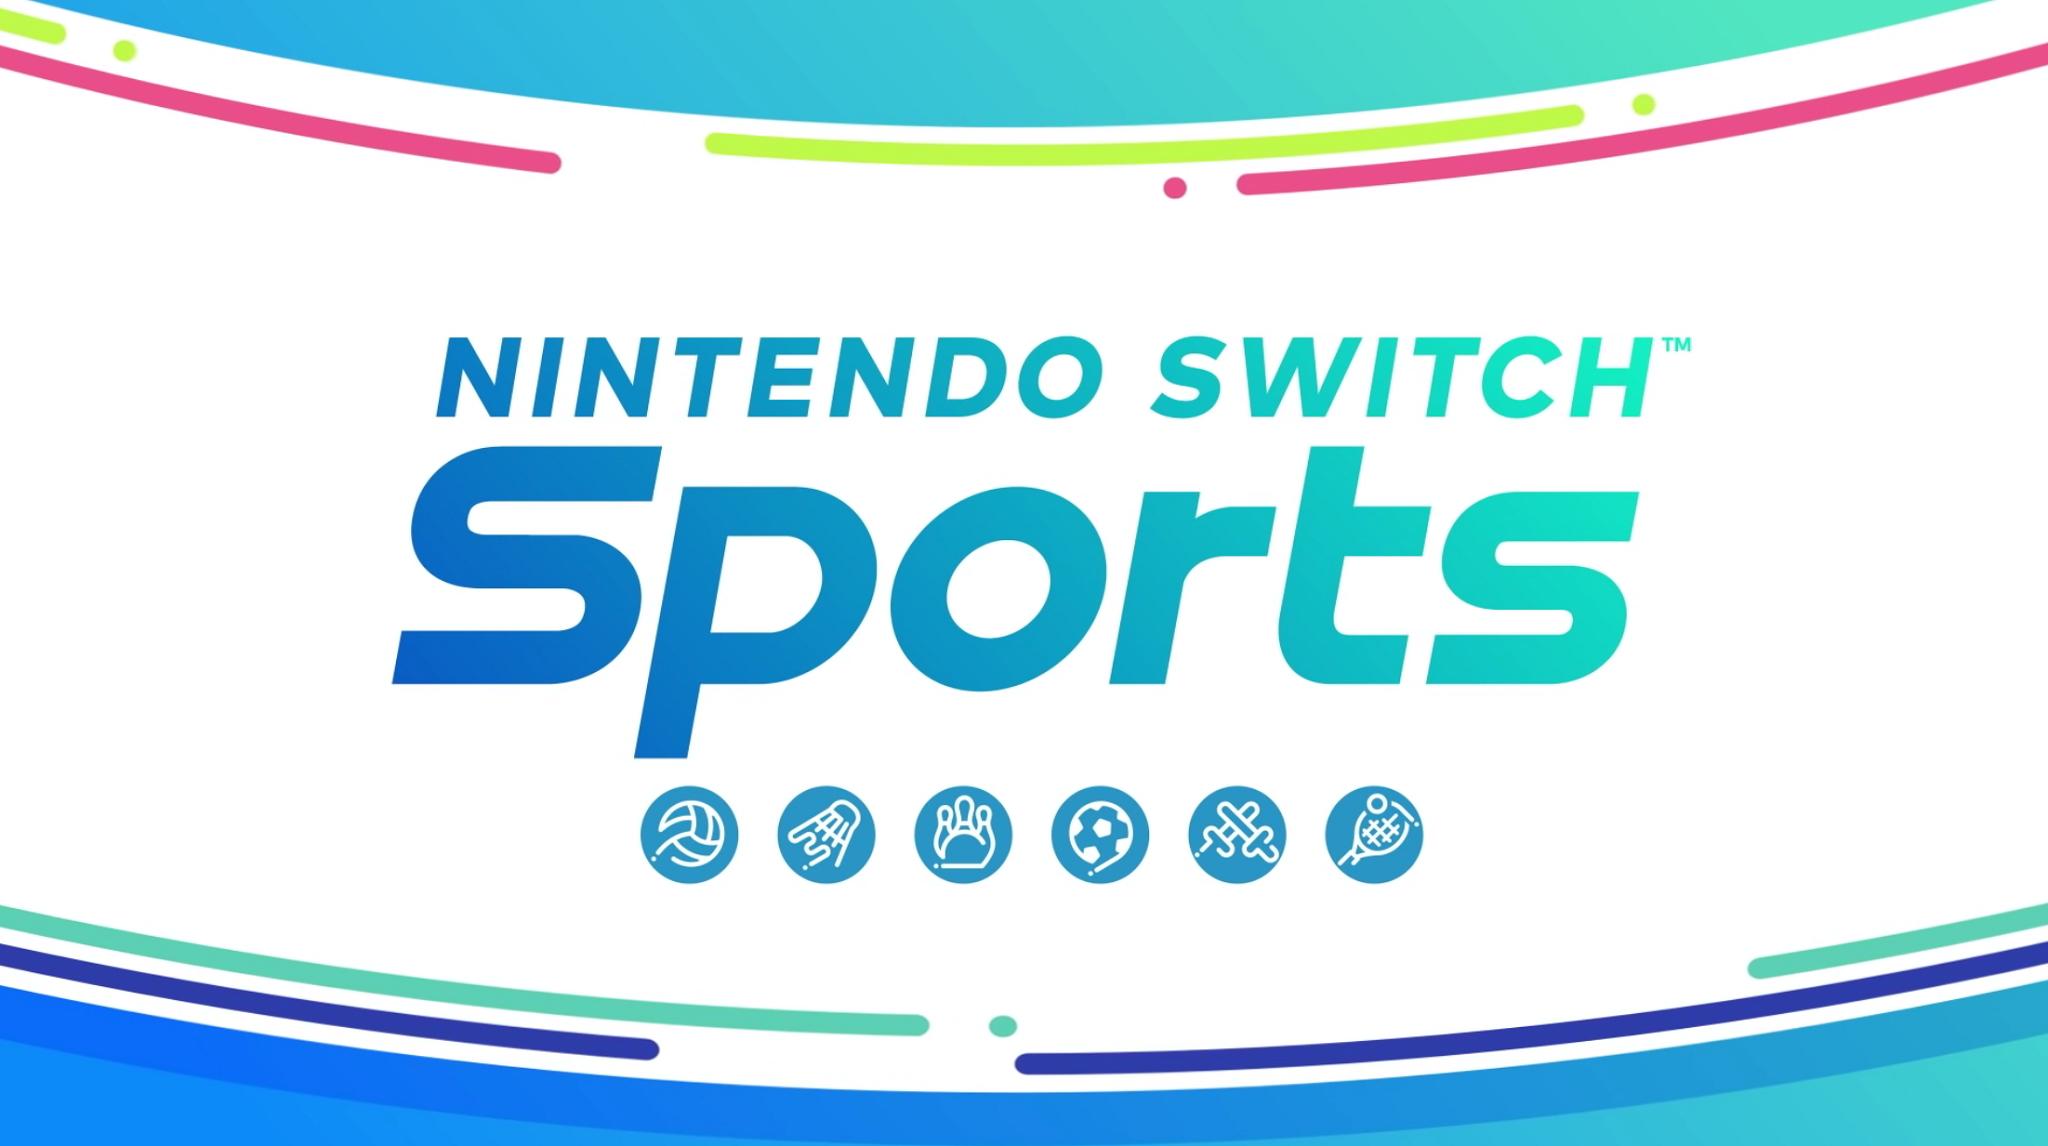 Nintendo Switch Sports Logo Image